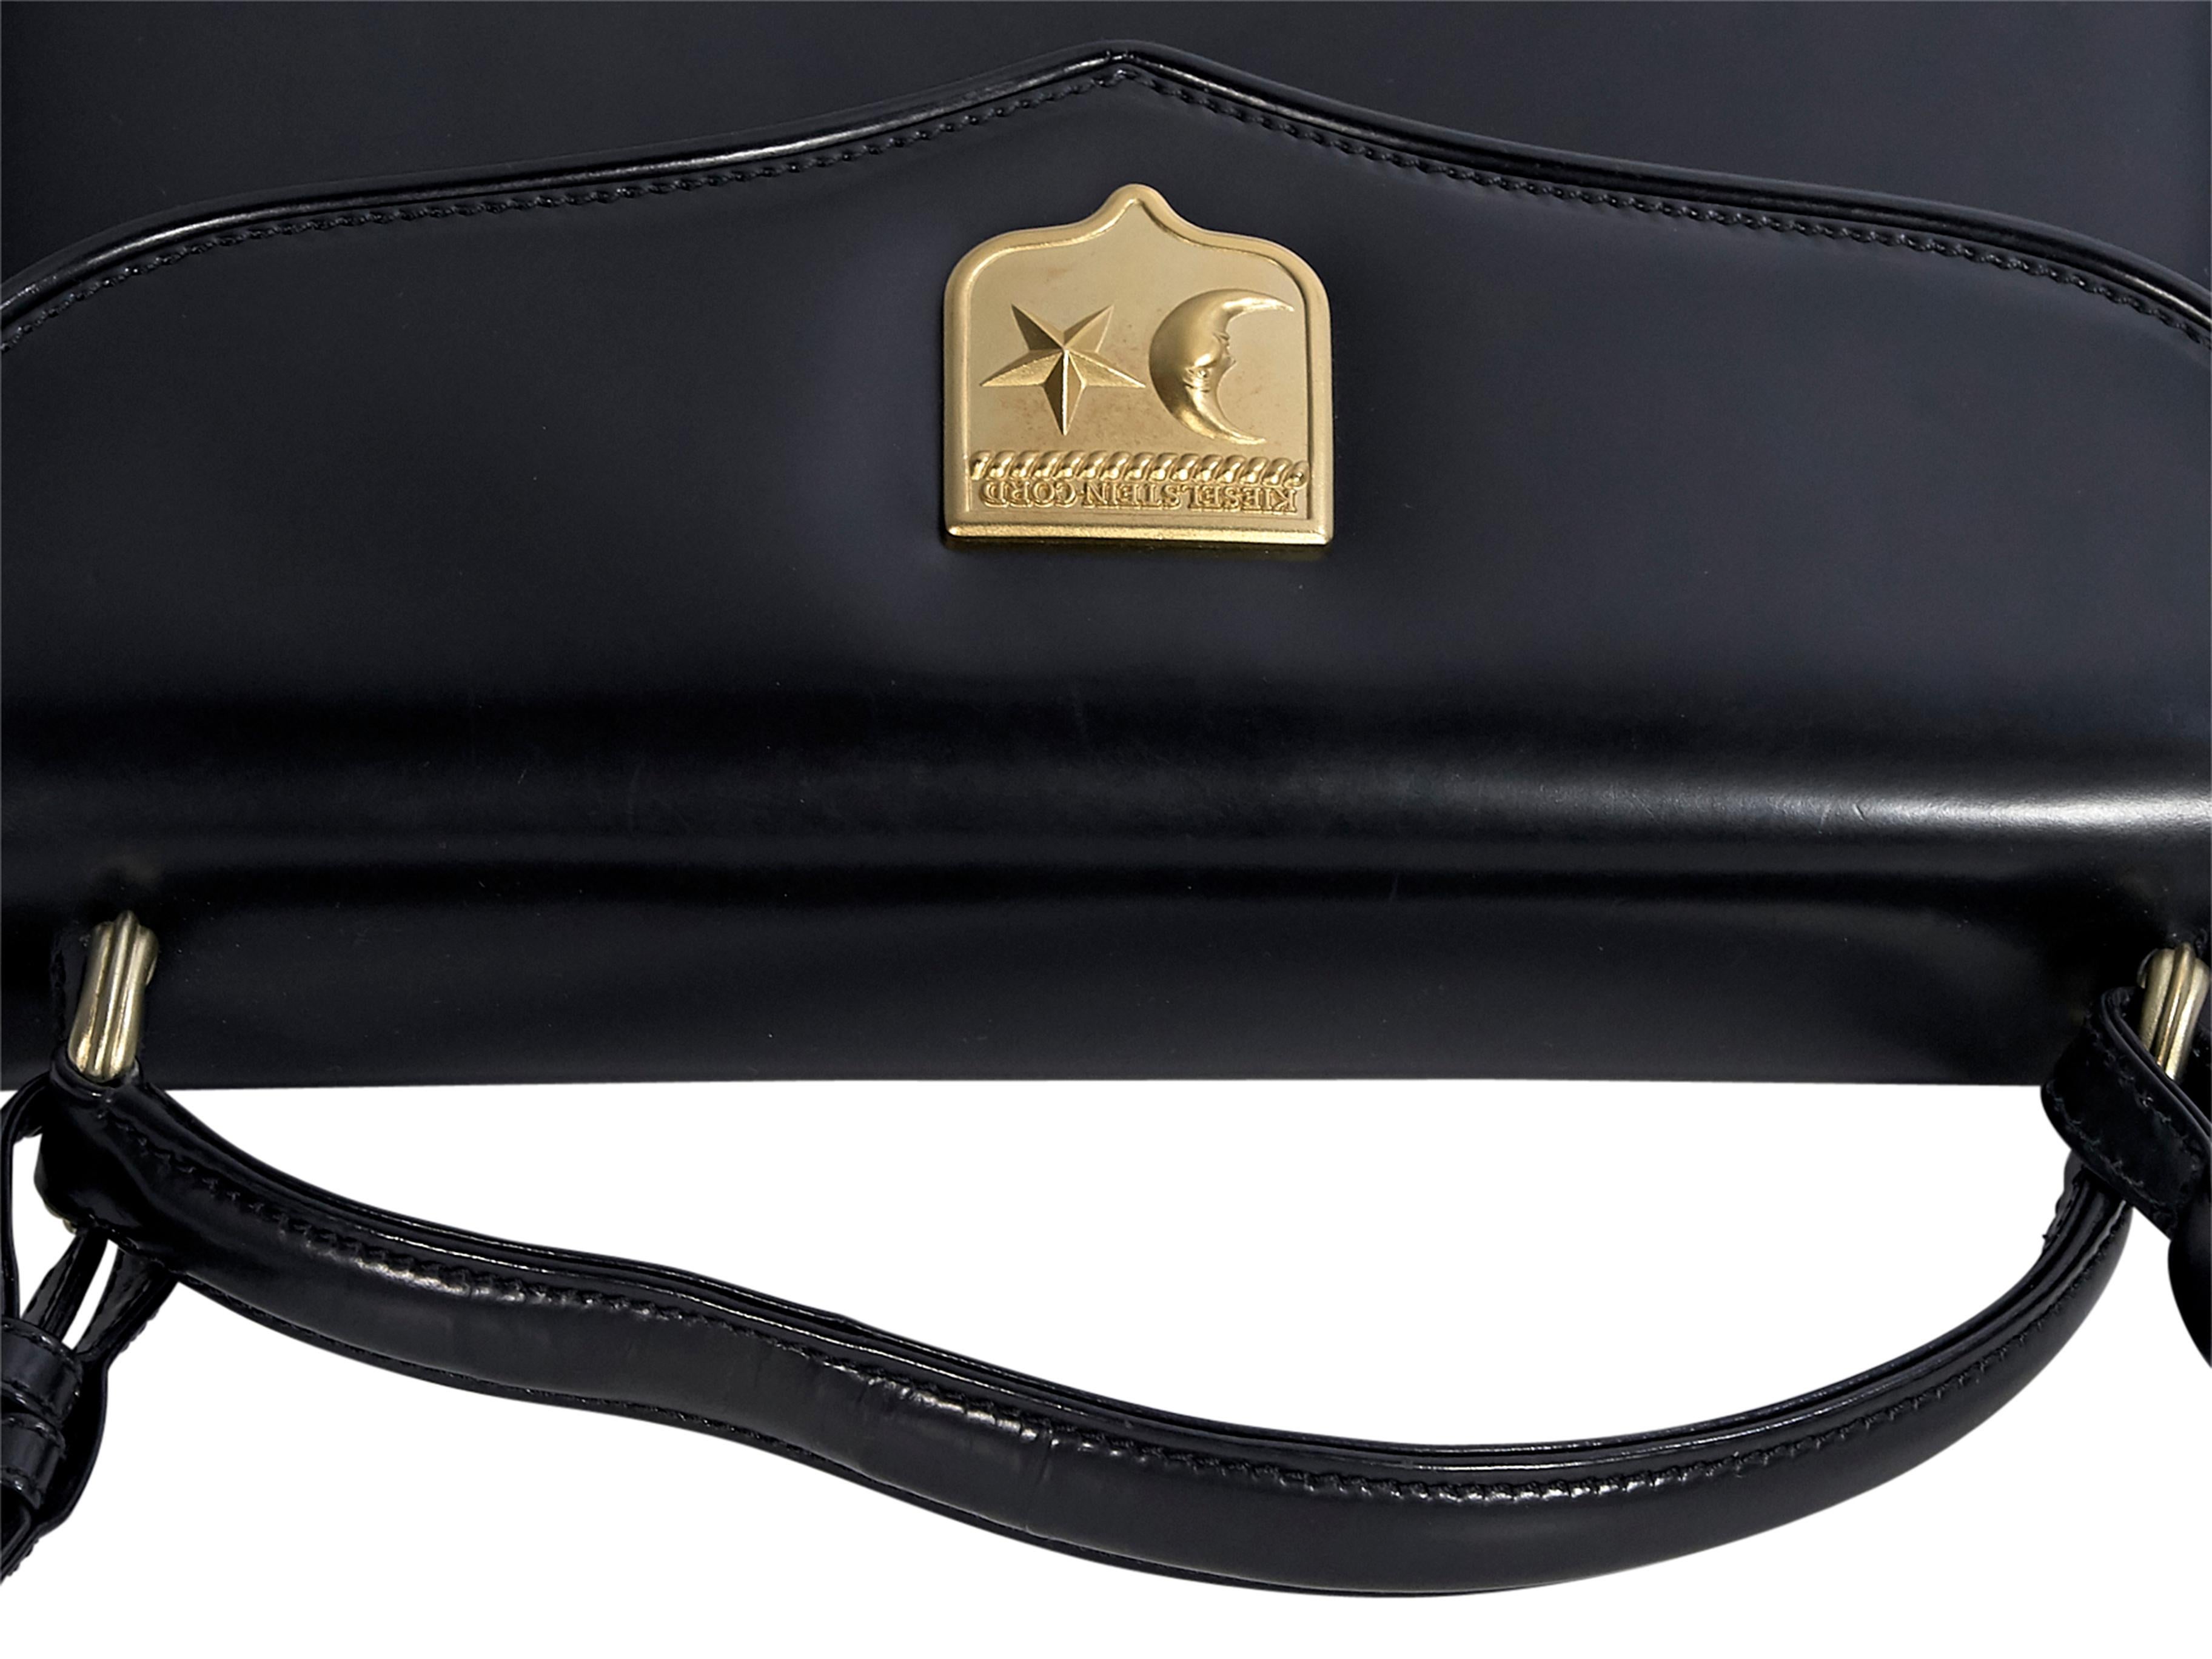  Keiselstein Leather Black Crossbody Bag 1